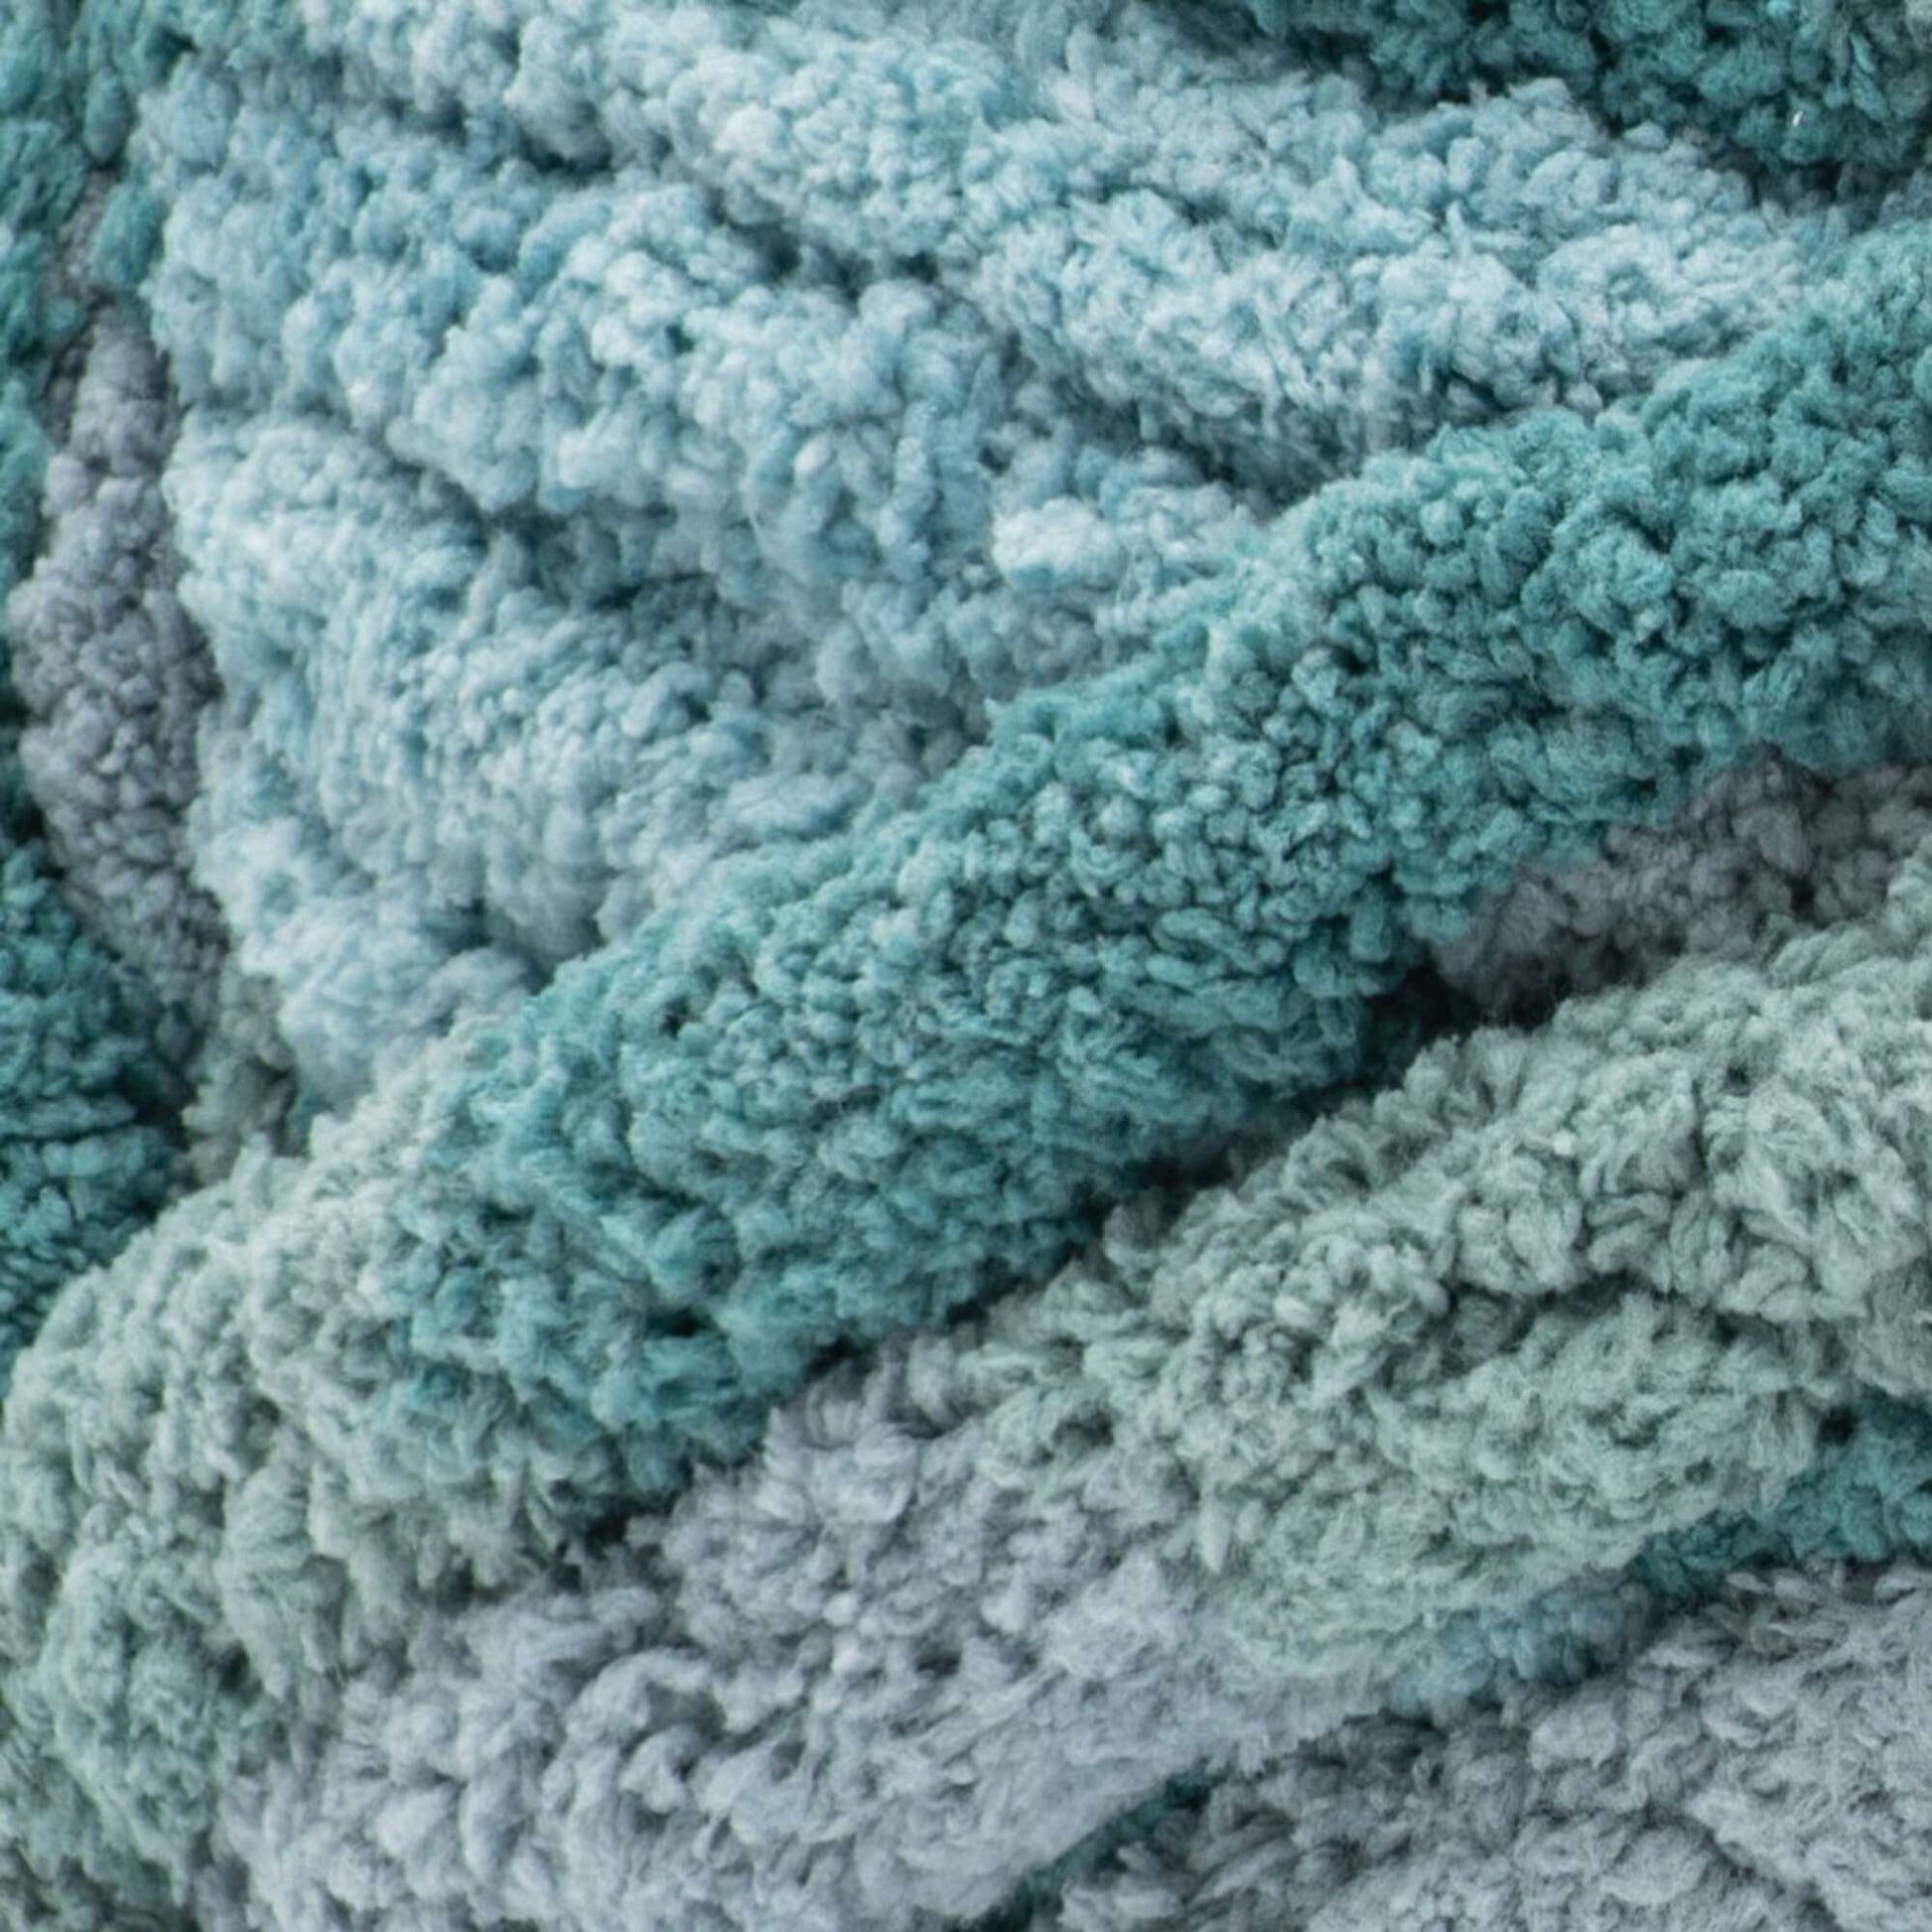 Bernat Blanket Extra Thick Yarn (600g/21.2oz) - Discontinued shades